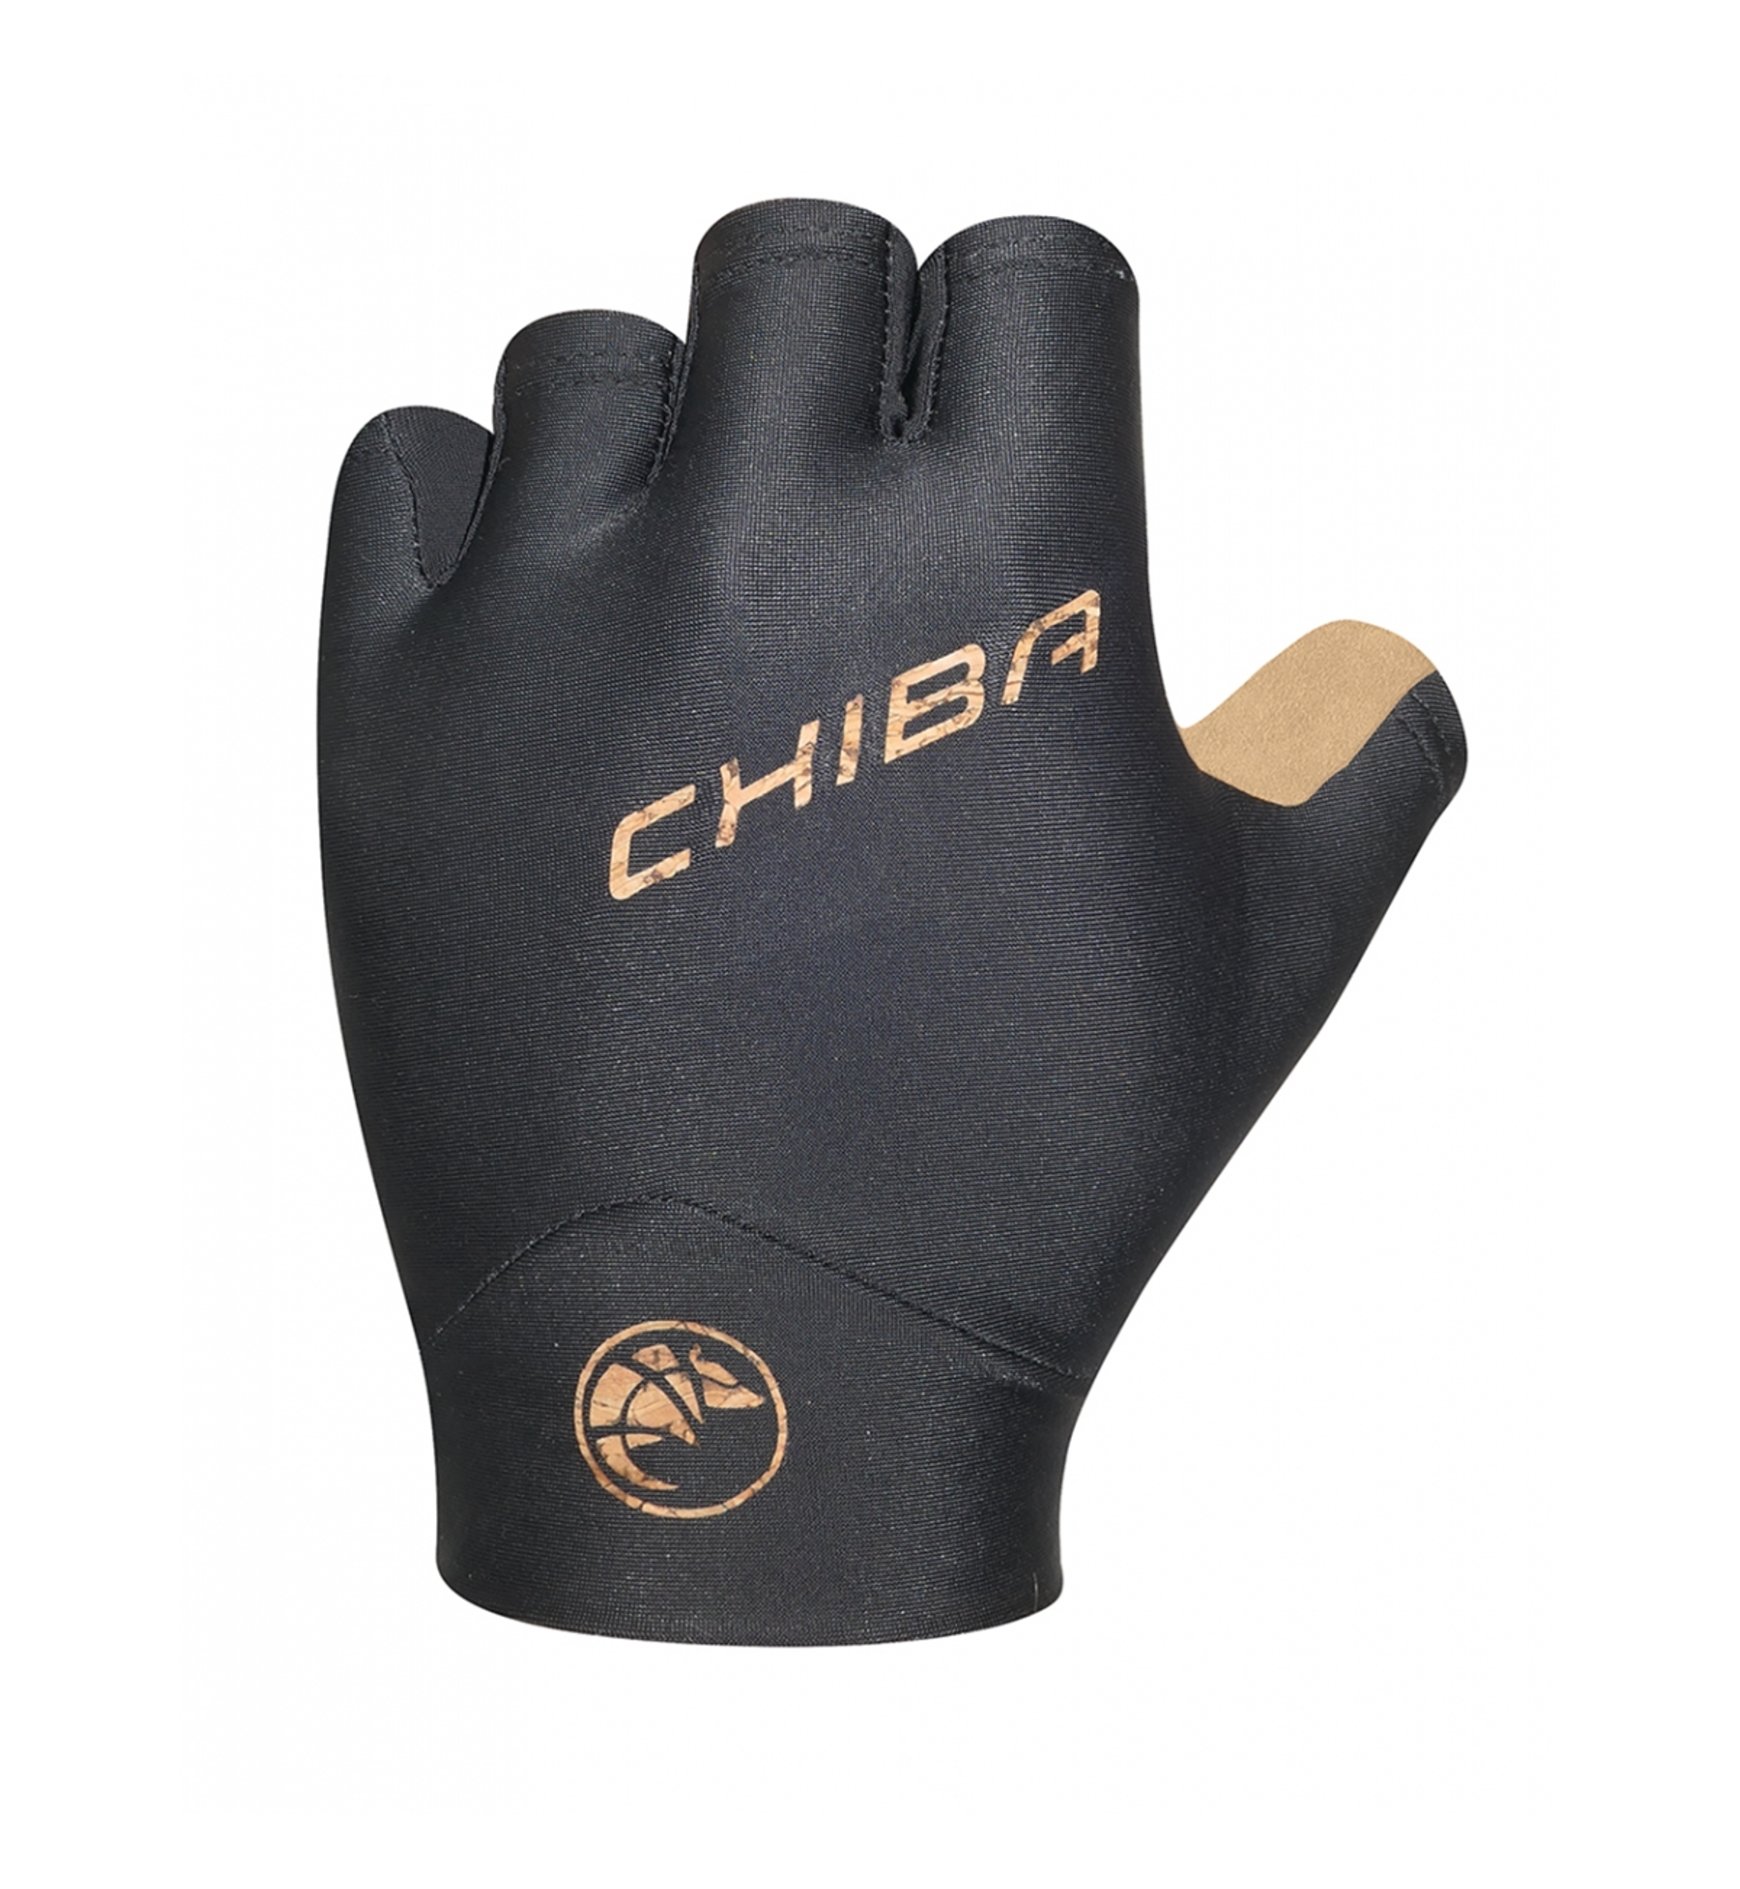 Chiba Eco Glove Pro Fahrradhandschuhe